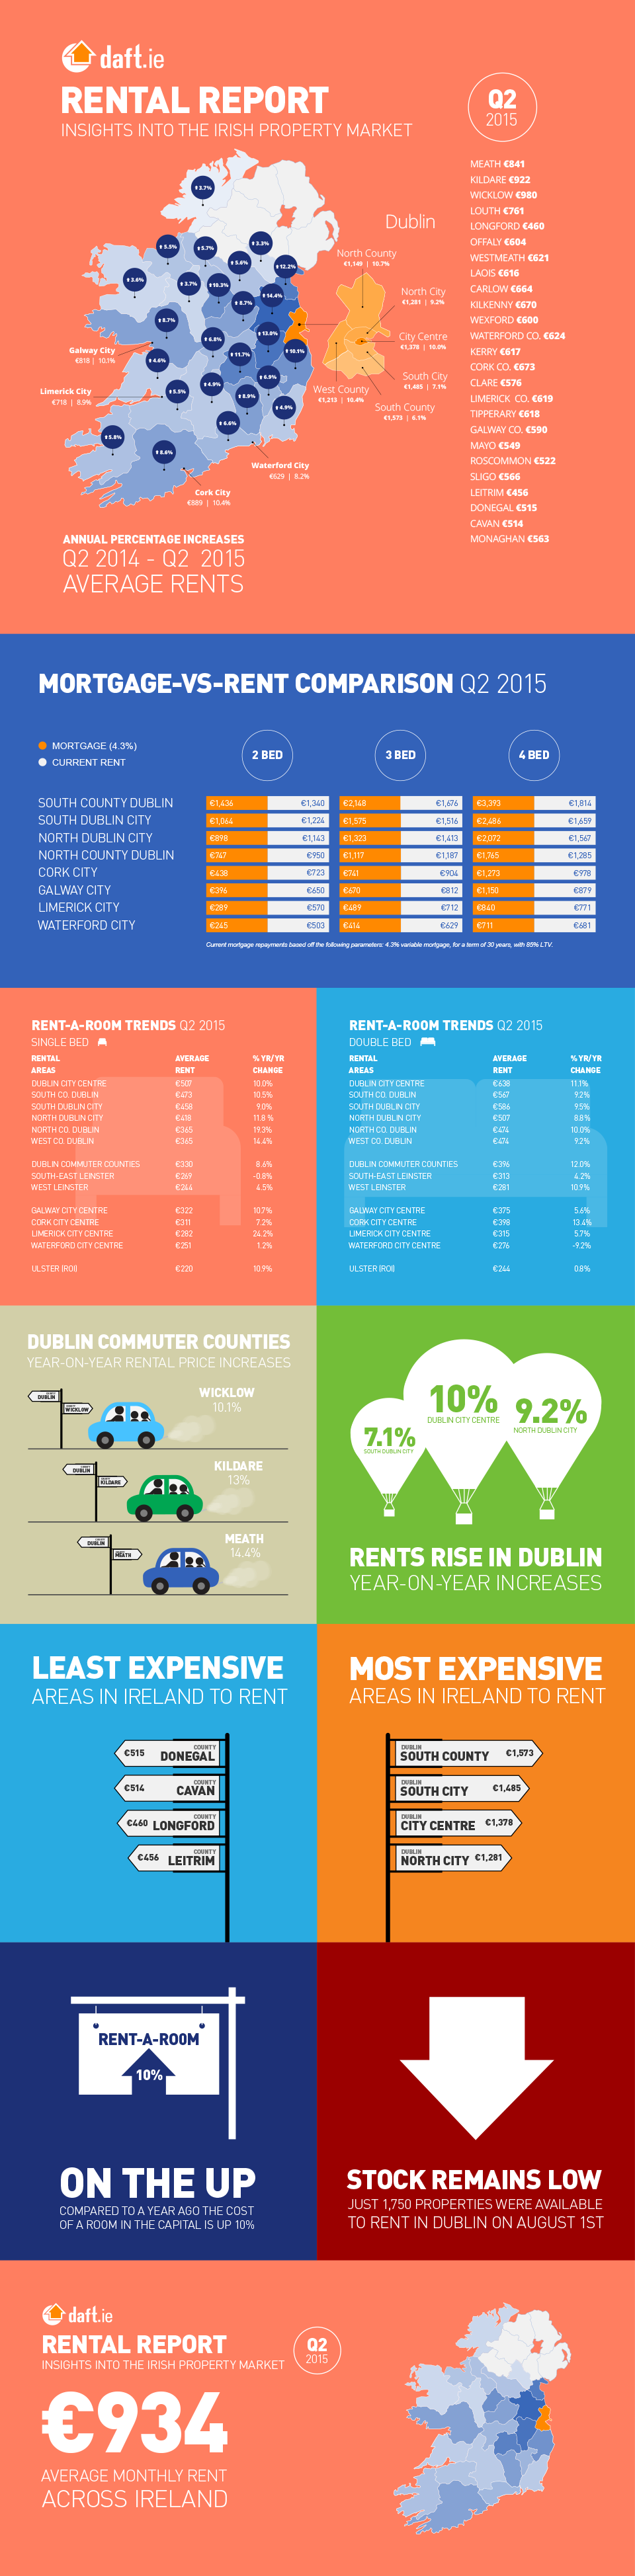 Daft.ie Rental Report: Q2 2015 Infographic